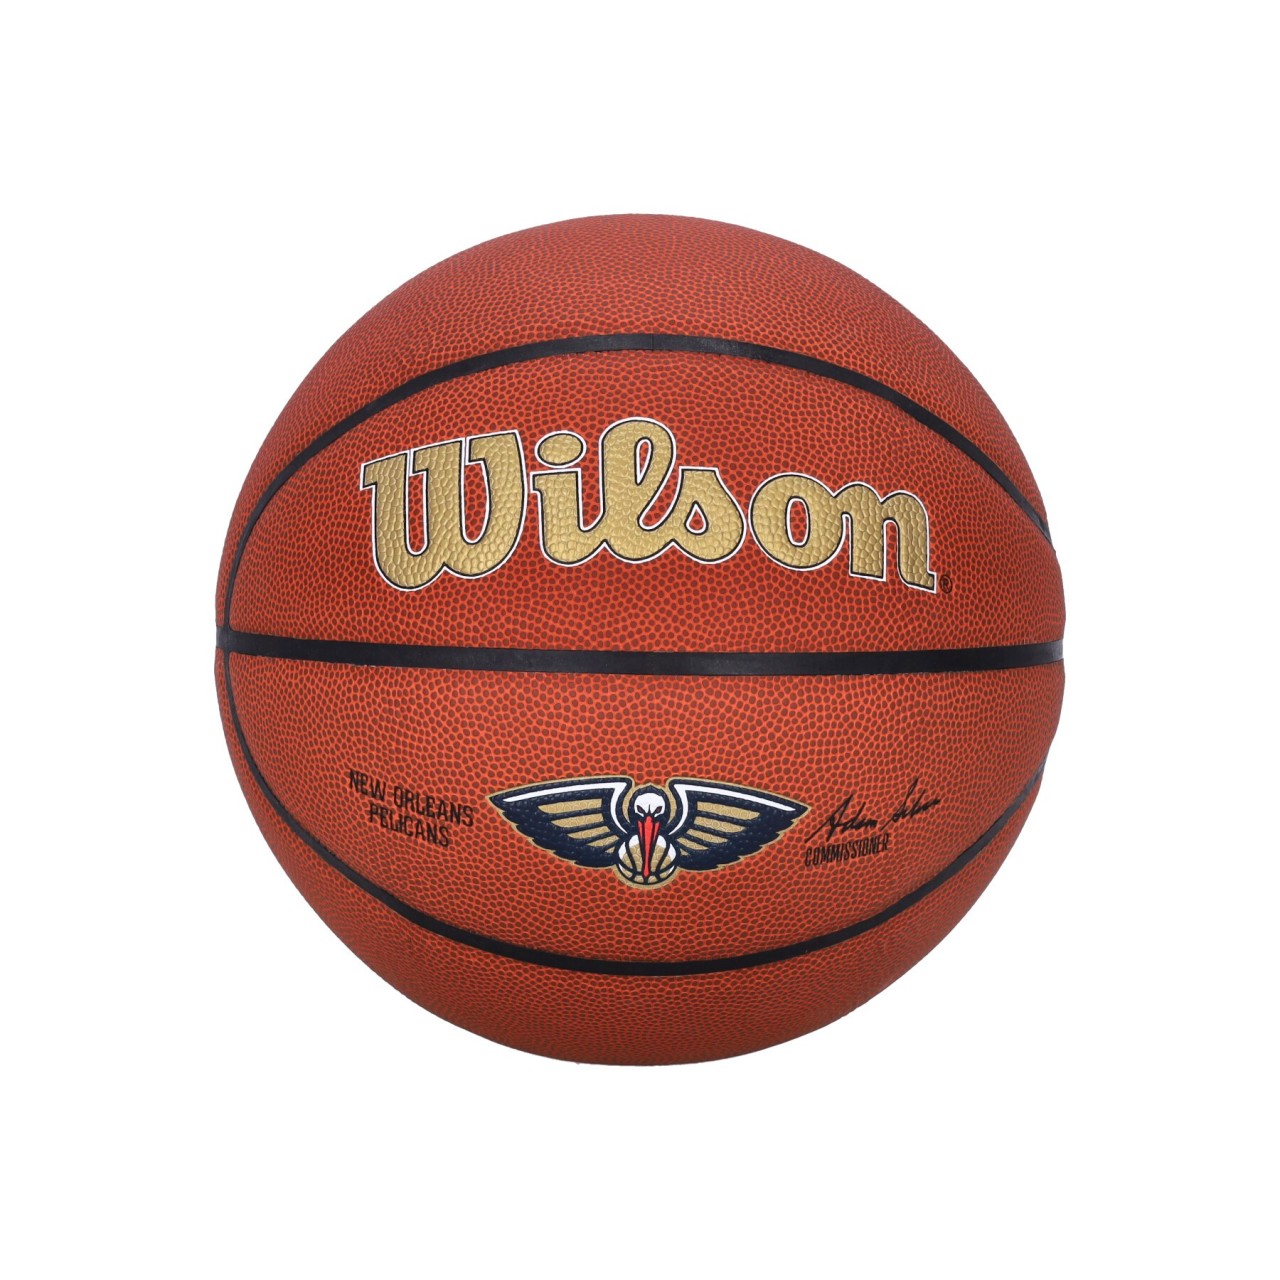 WILSON TEAM NBA TEAM ALLIANCE BASKETBALL SIZE 7 NEOPEL WTB3100XBBNO